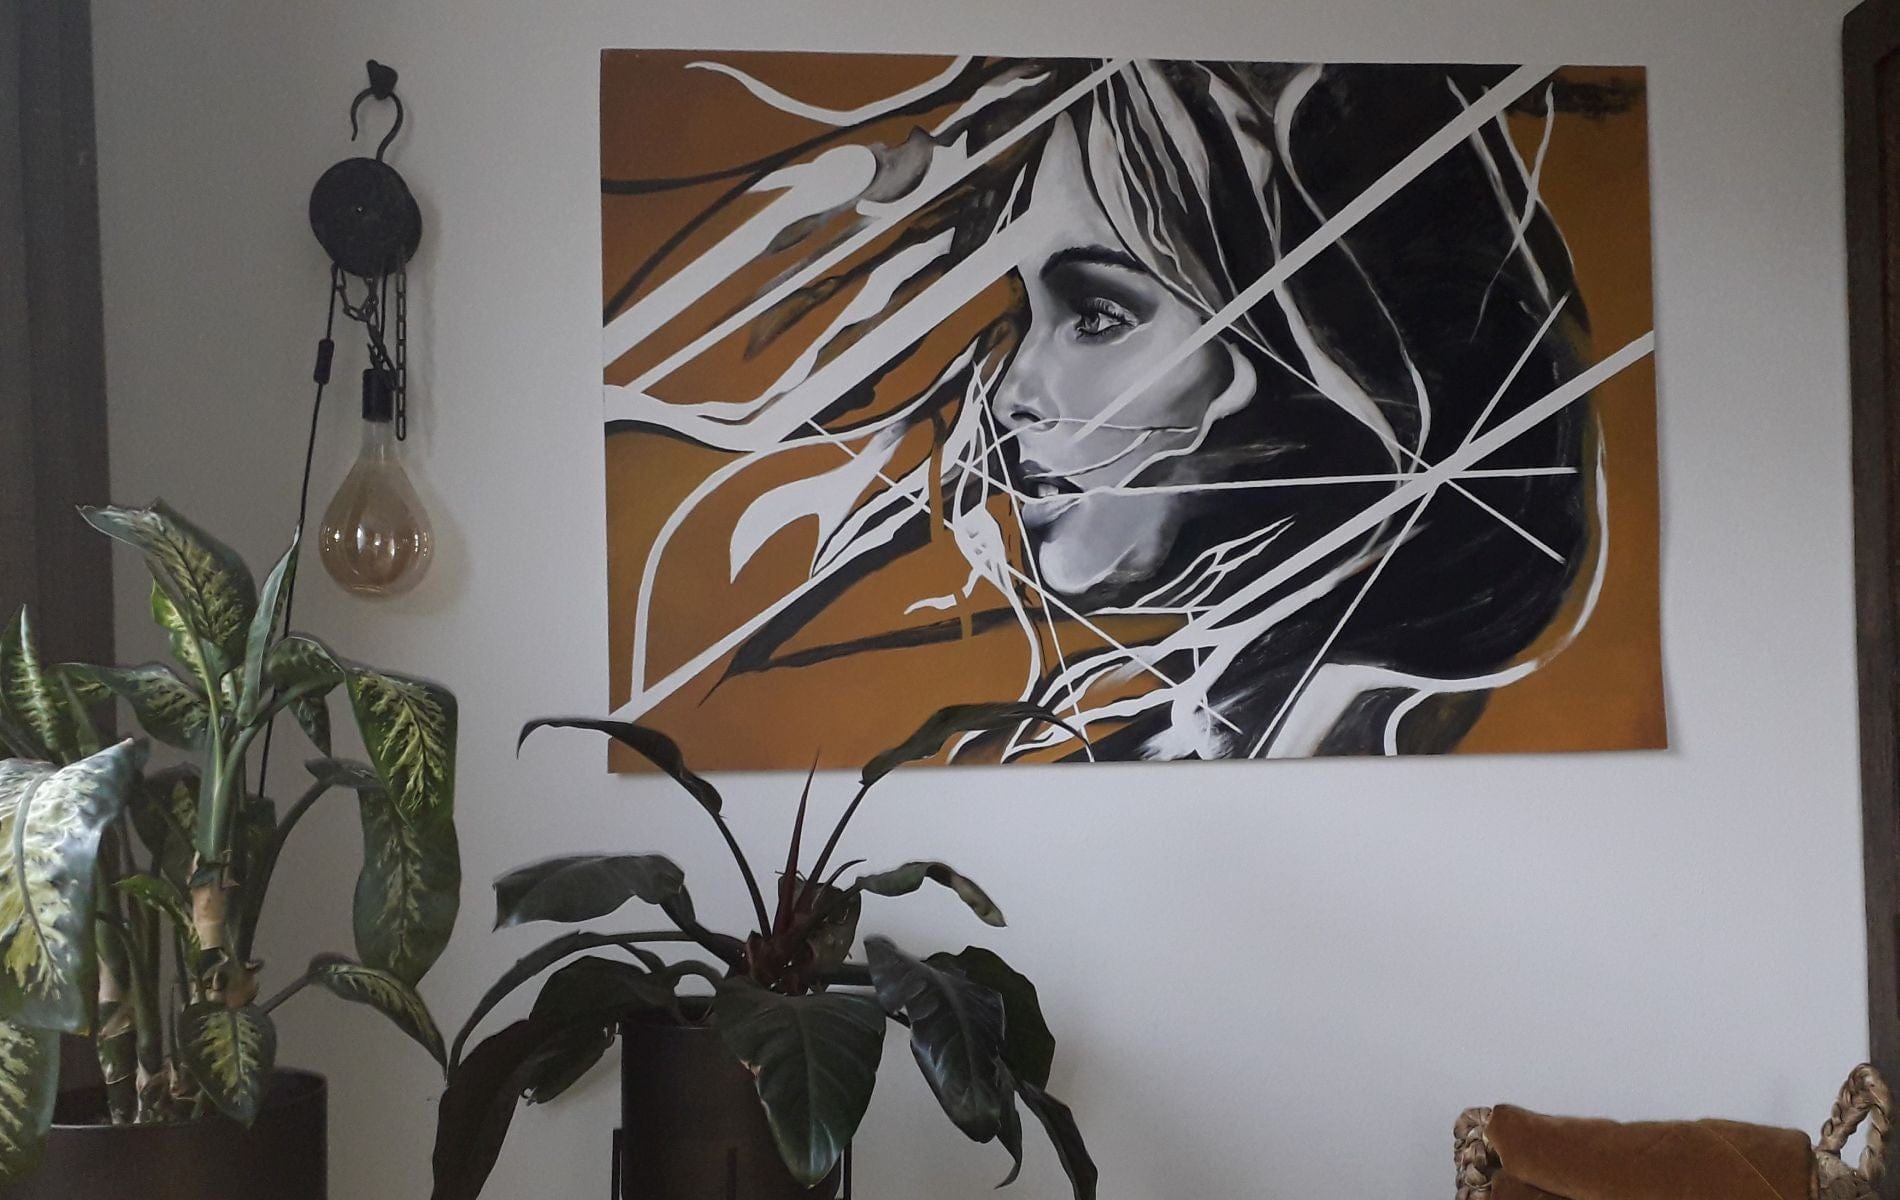 €425,00 Schilderij Vrouw "Striped woman" 210x140cm